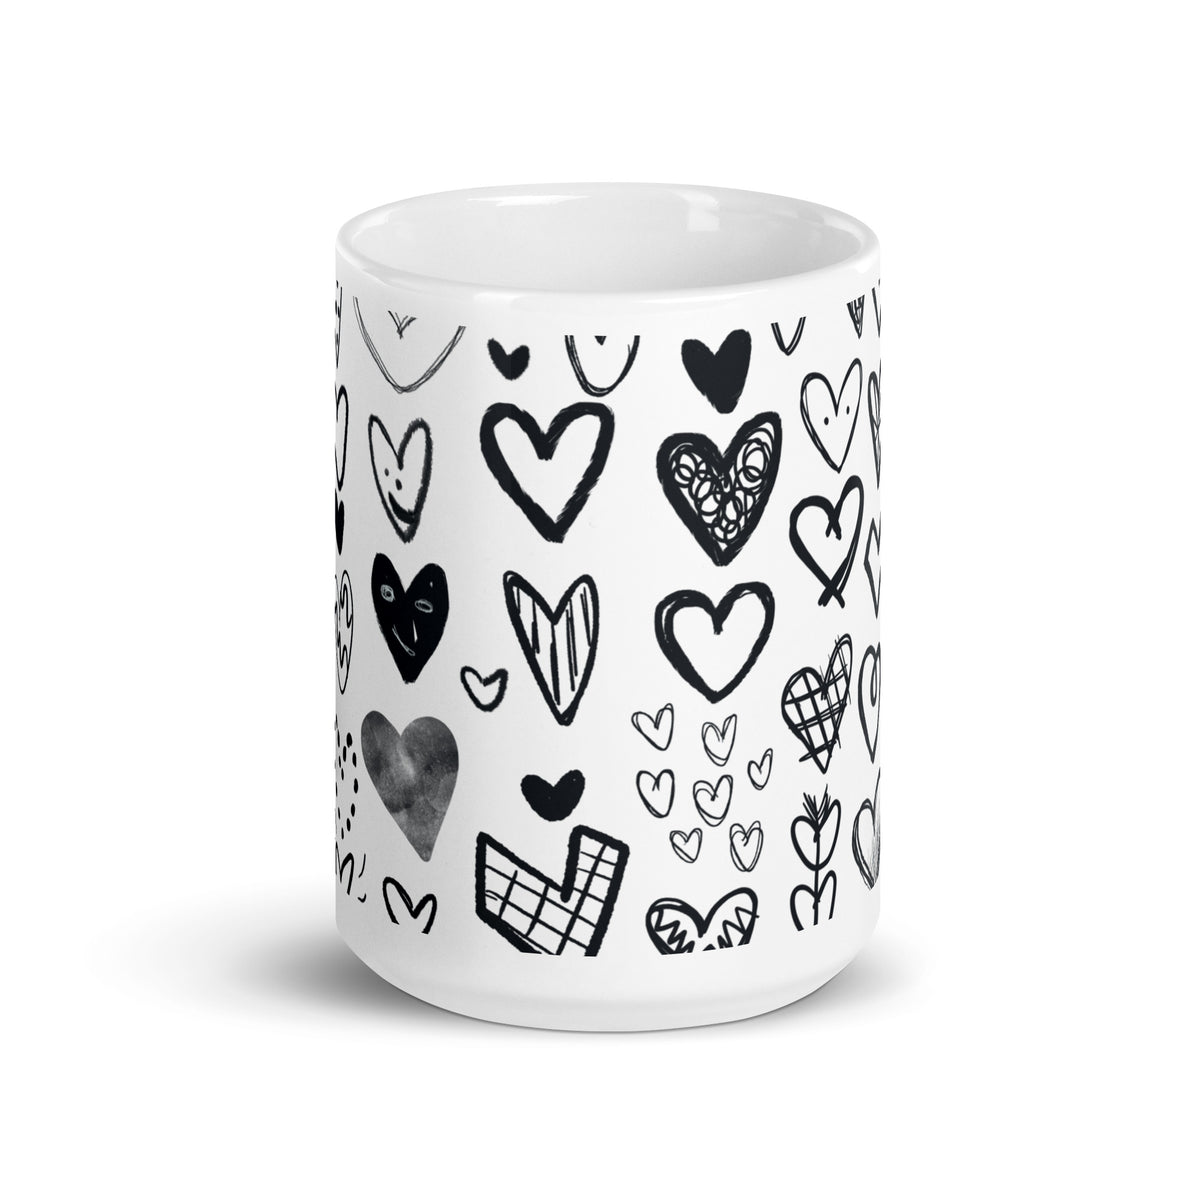 Pencil Heart White glossy mug